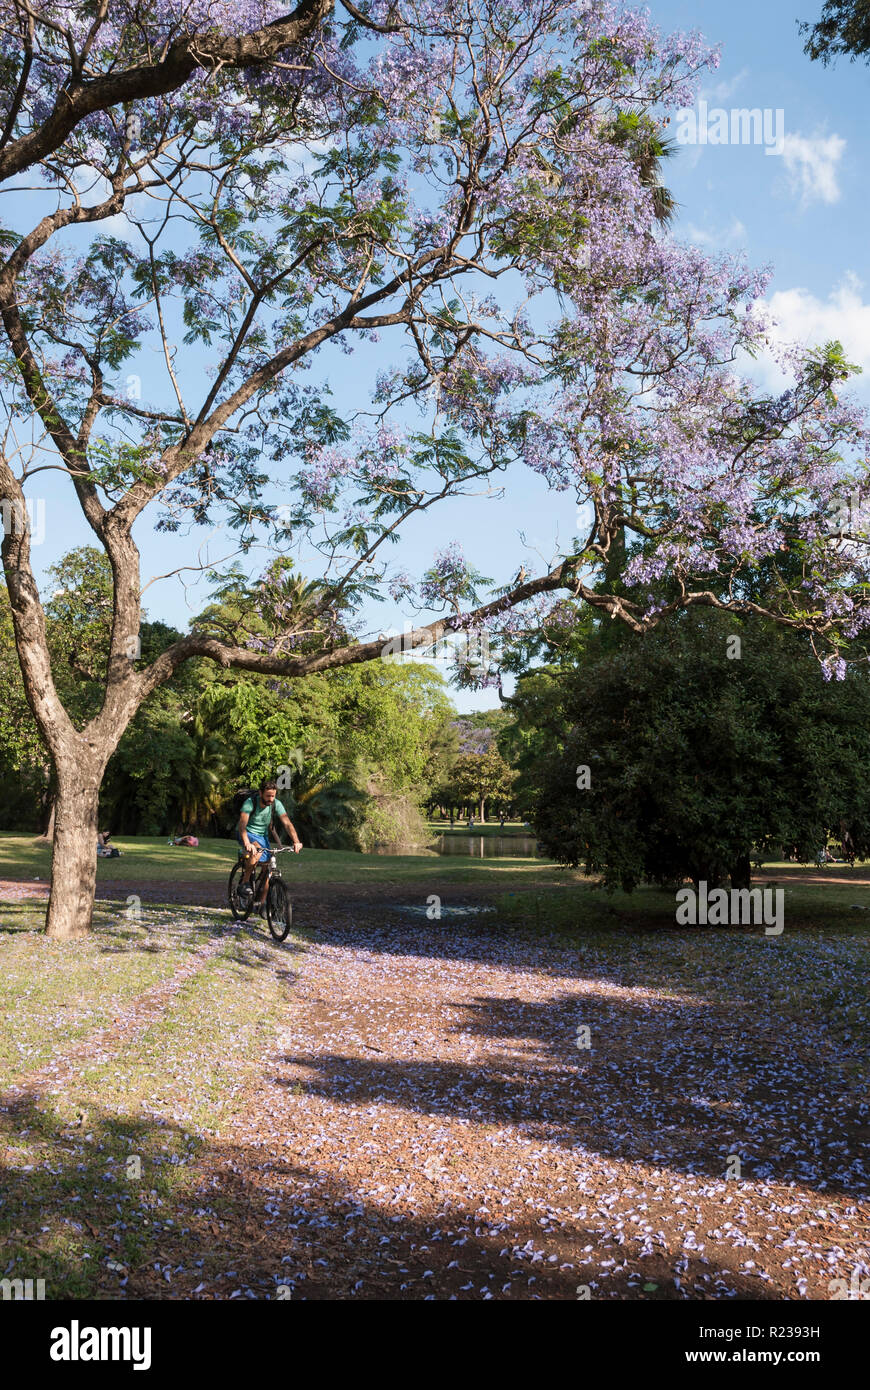 Jacaranda trees in Buenos Aires, Argentina, during springtime Stock Photo